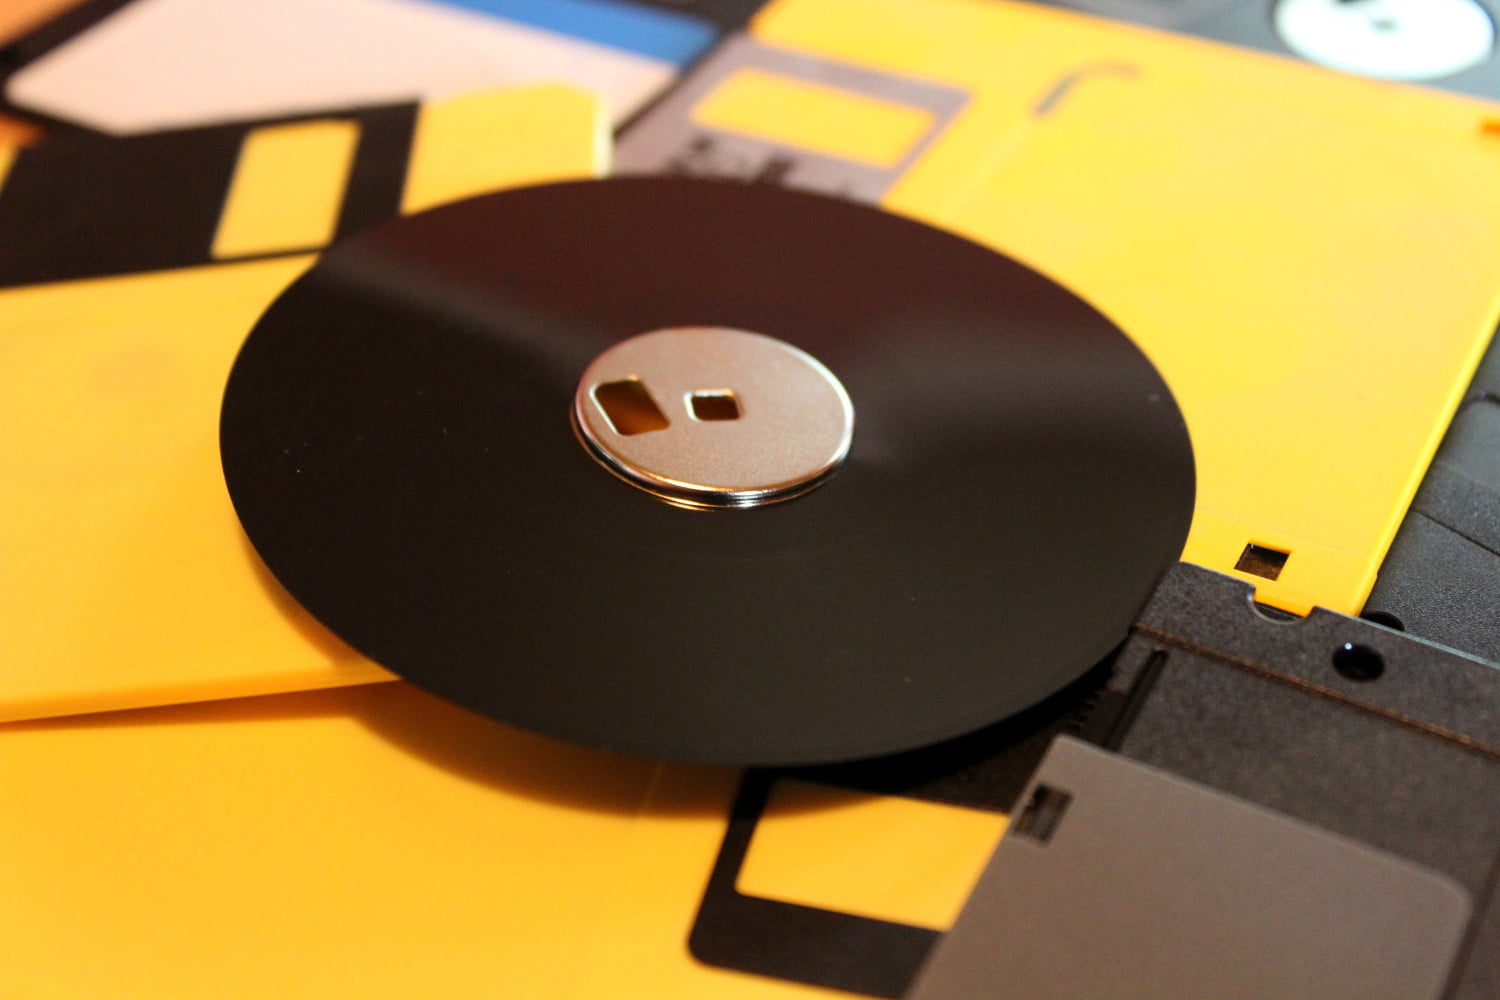 Pengertian Floppy Disk : Sejarah, Fungsi dan Cara Kerja (Lengkap)